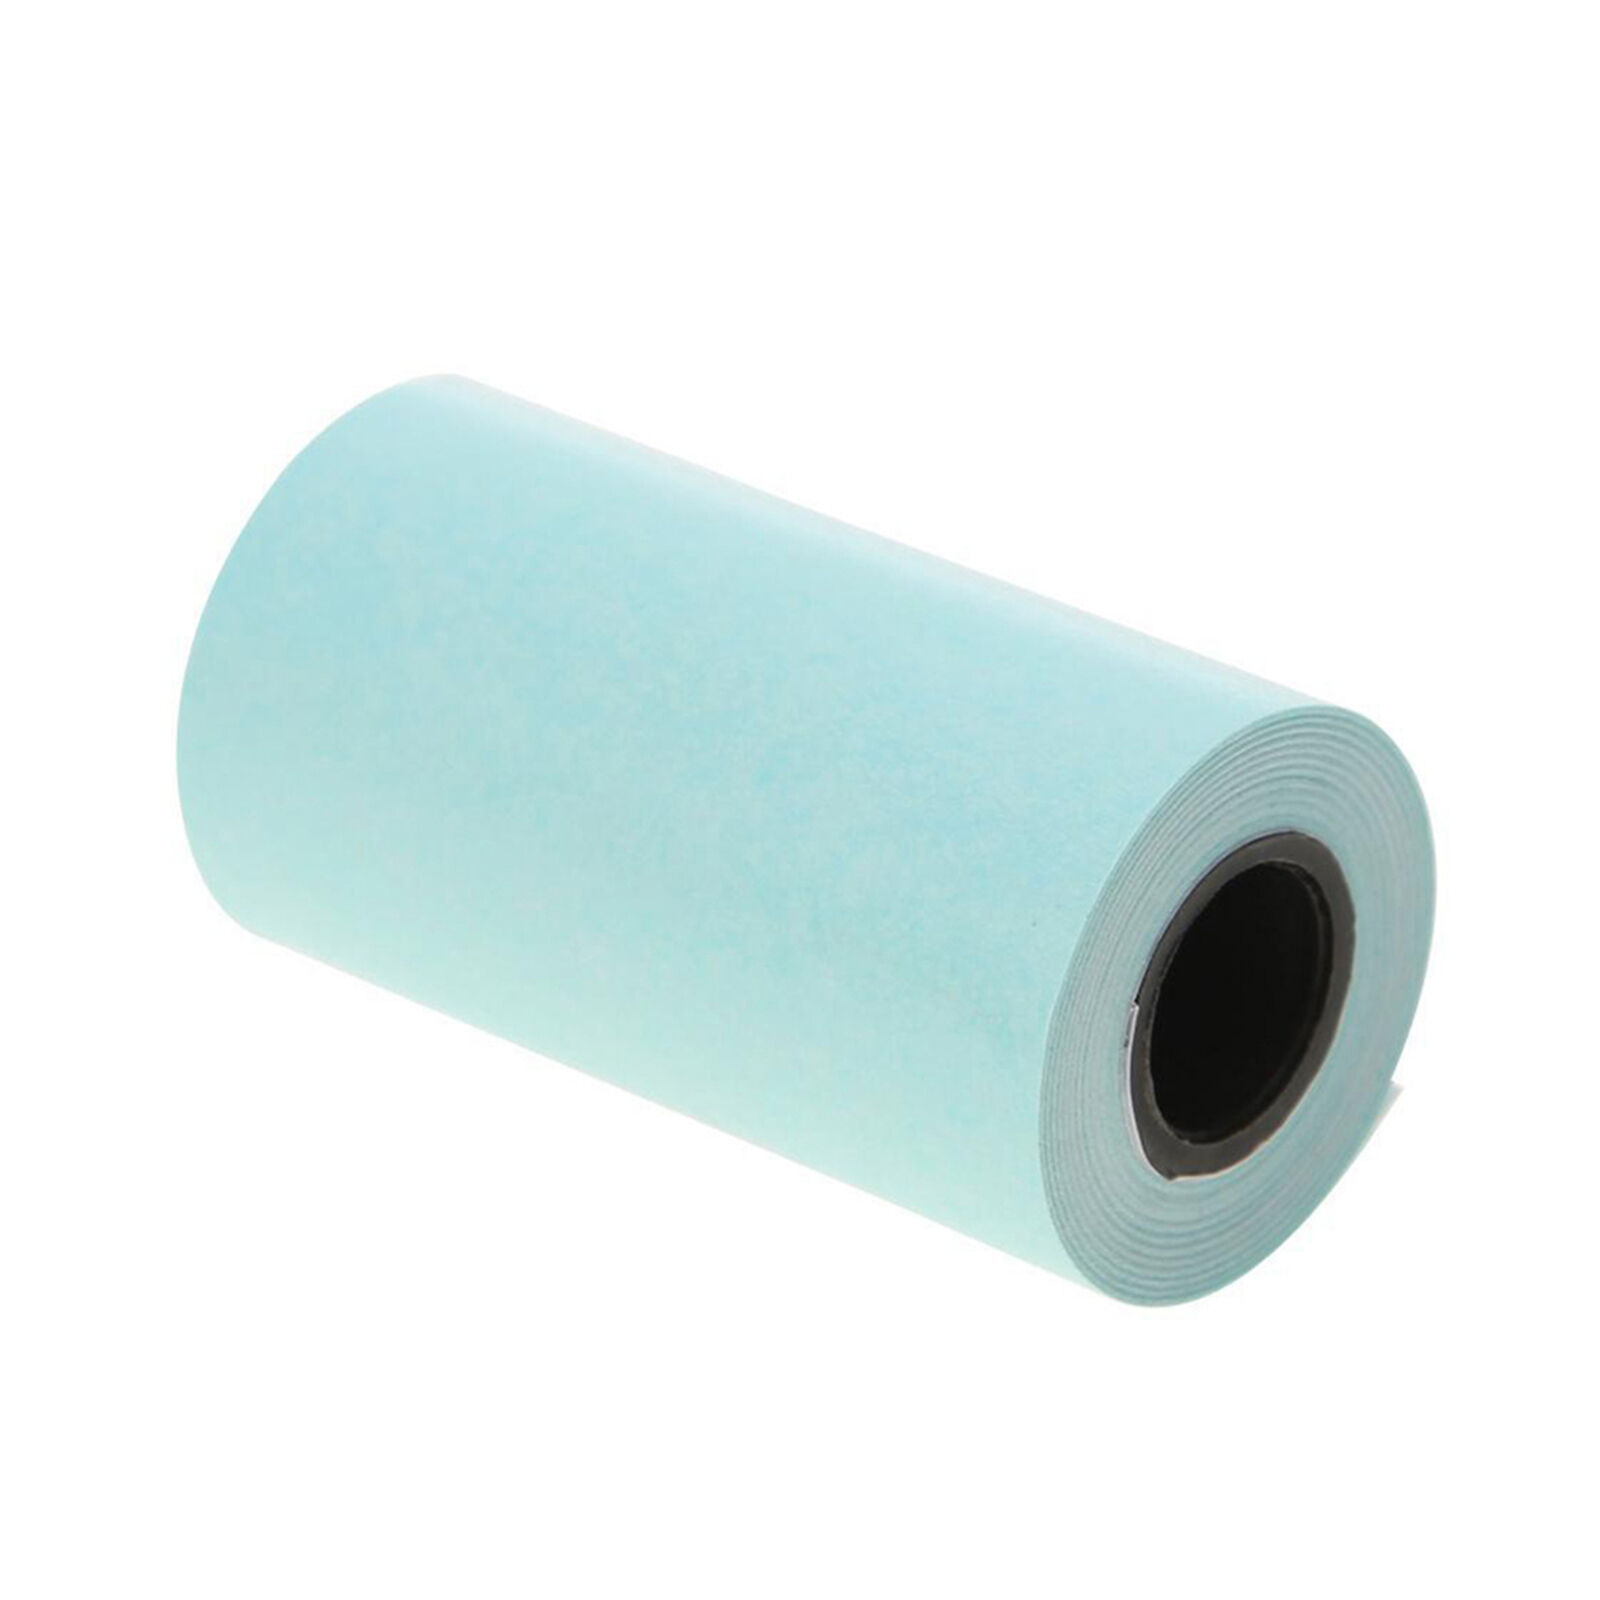 Thermal Tape Multi-use Wide Application Thermal Printing Paper Waterproof